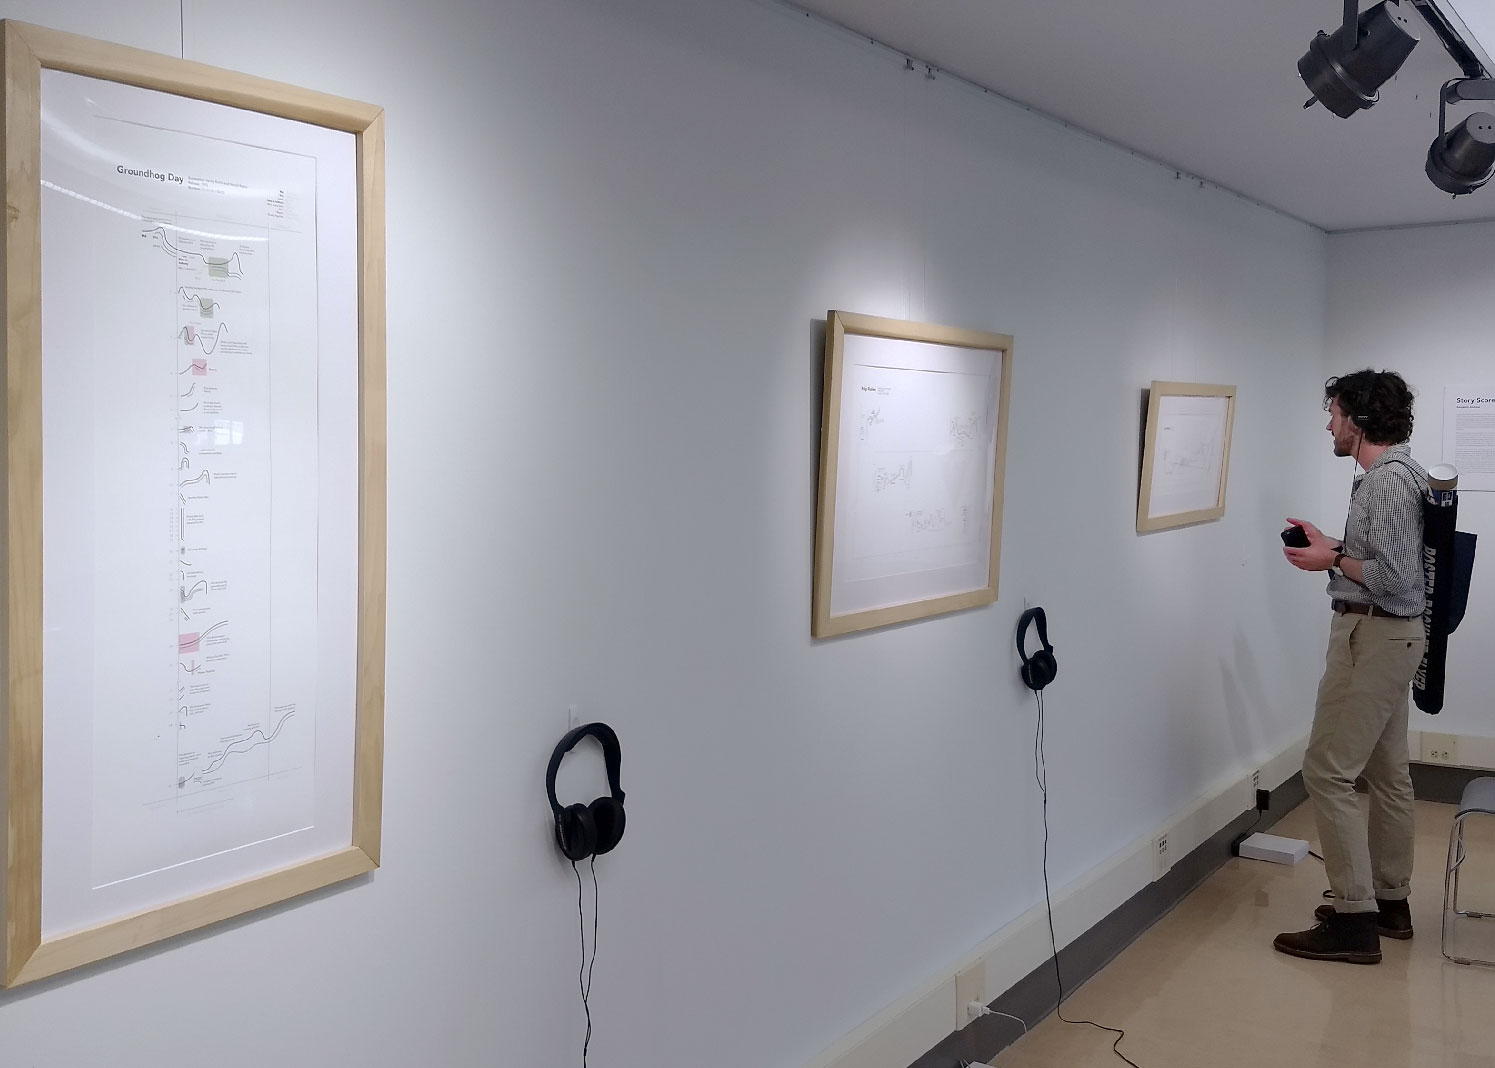 Frames prints in a gallery with headphones hanging below each one.